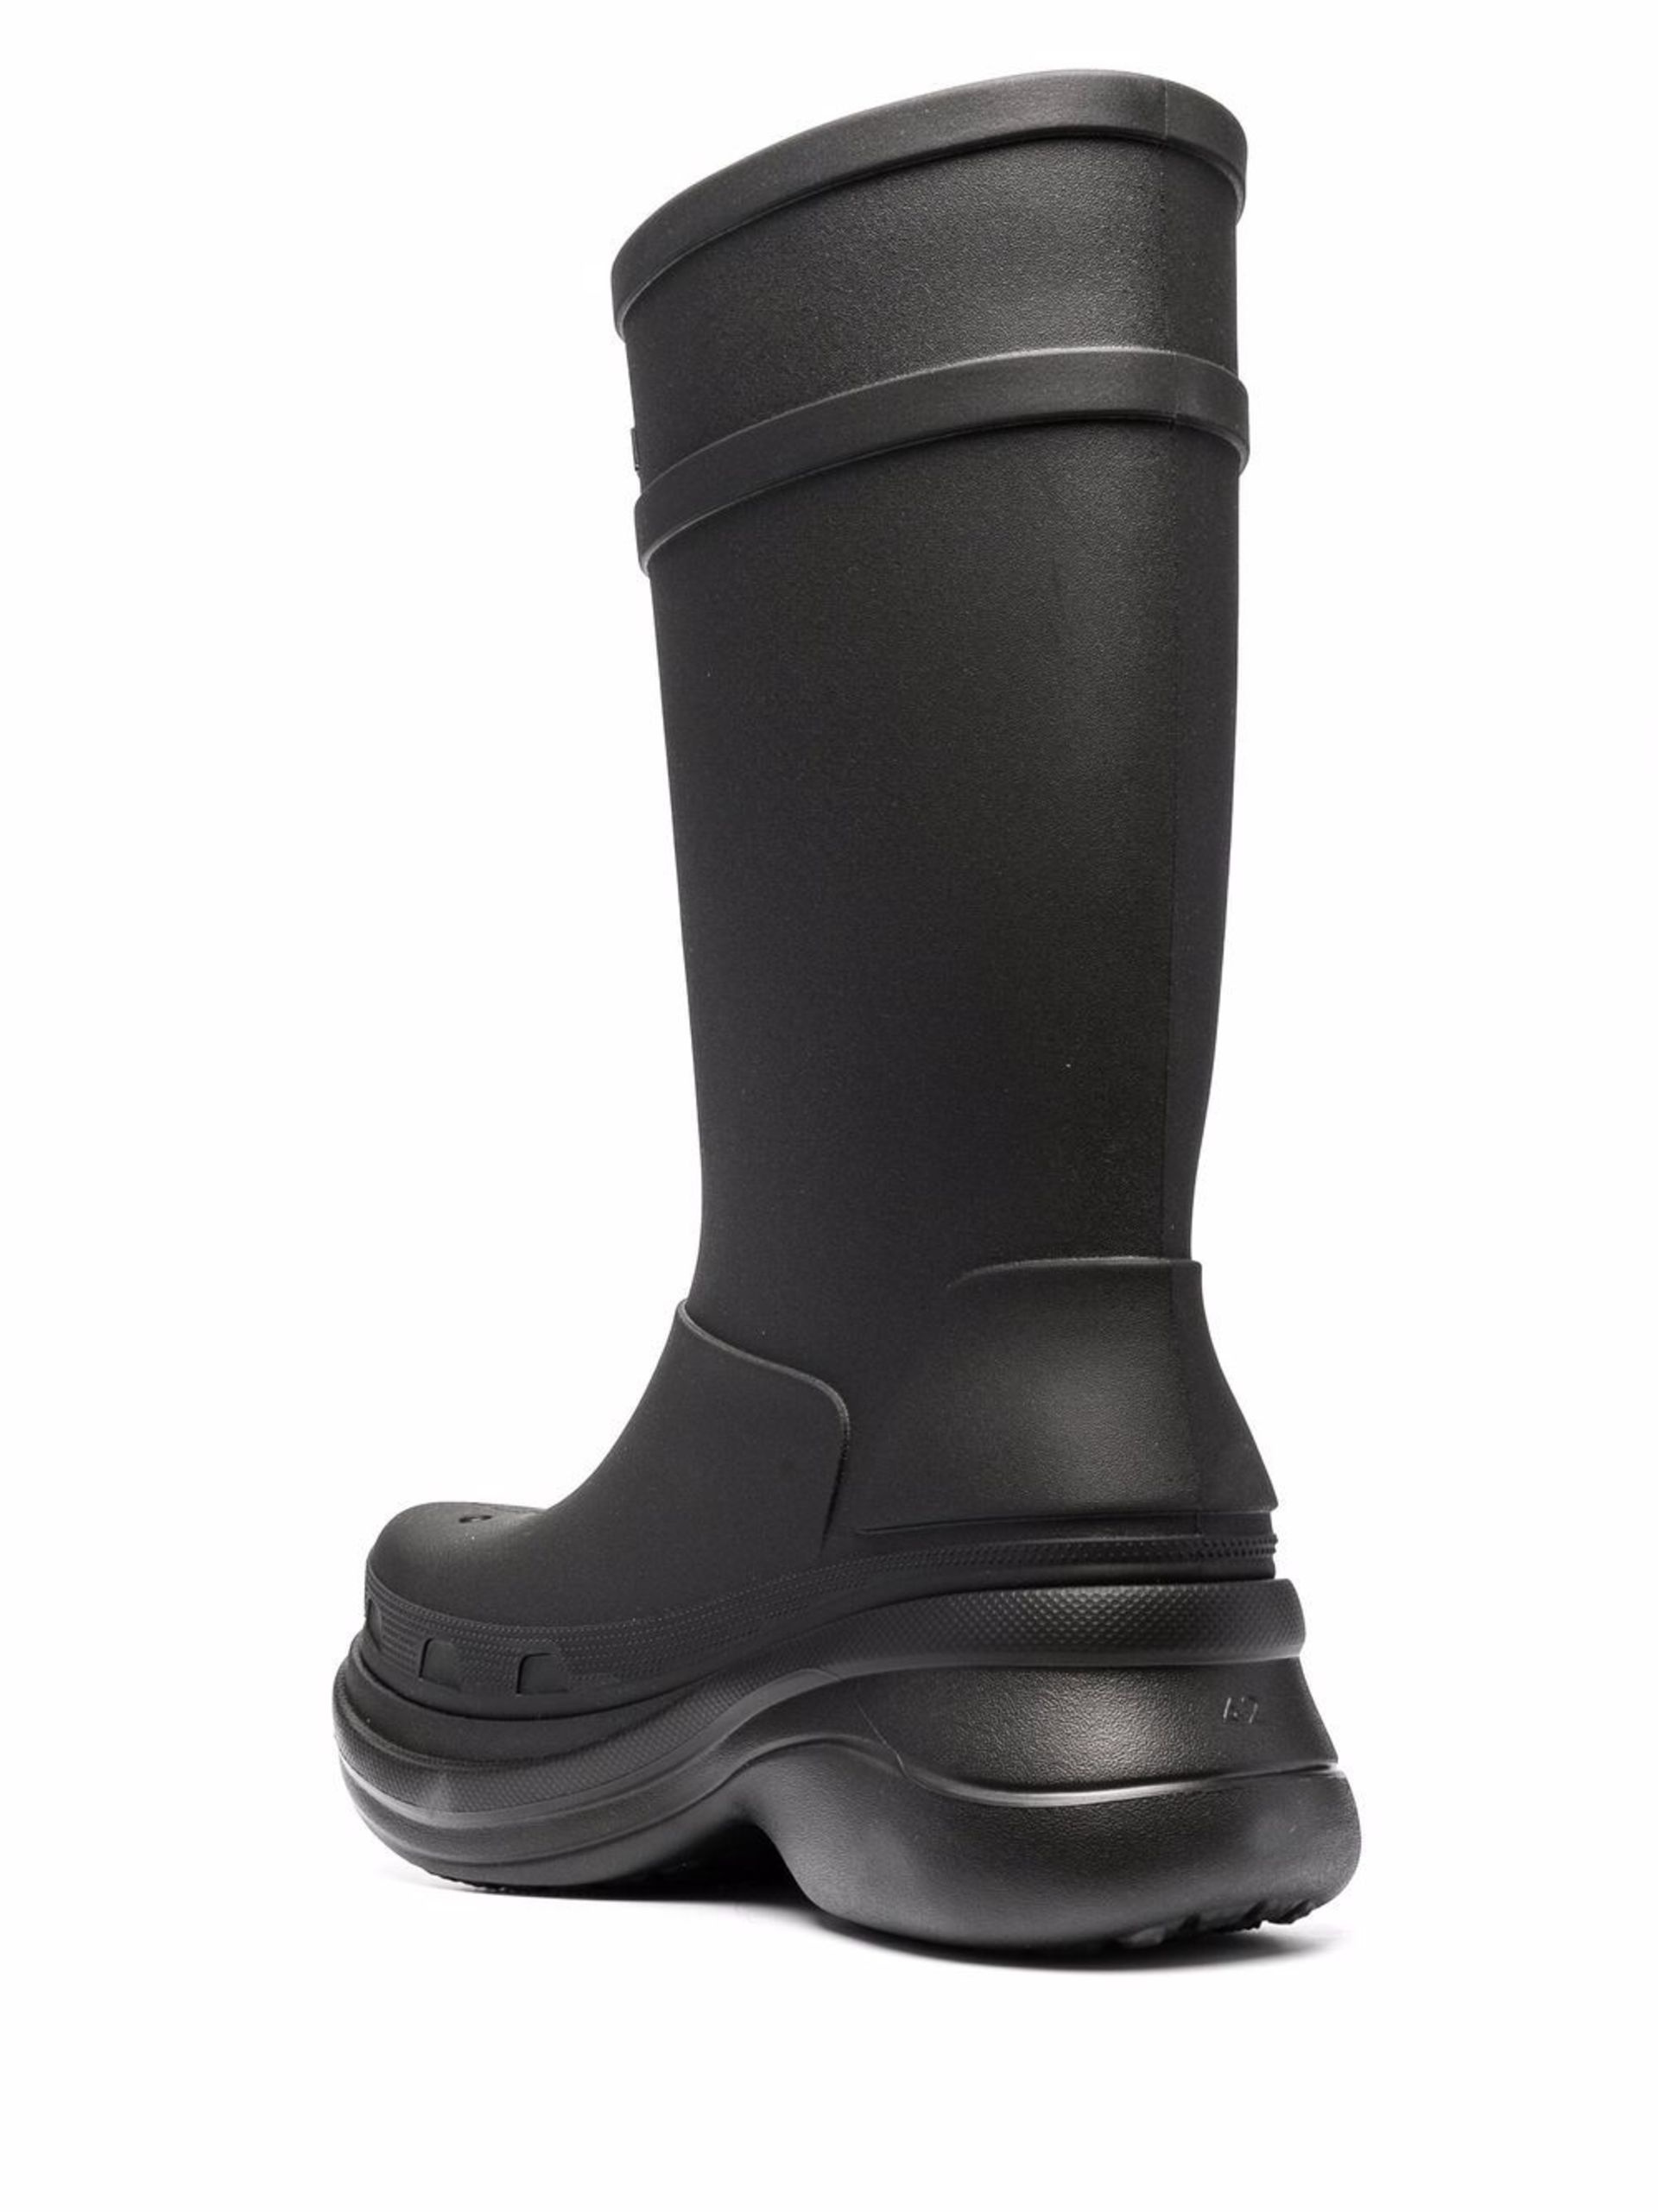 X Crocs Black Rain Boots - 3